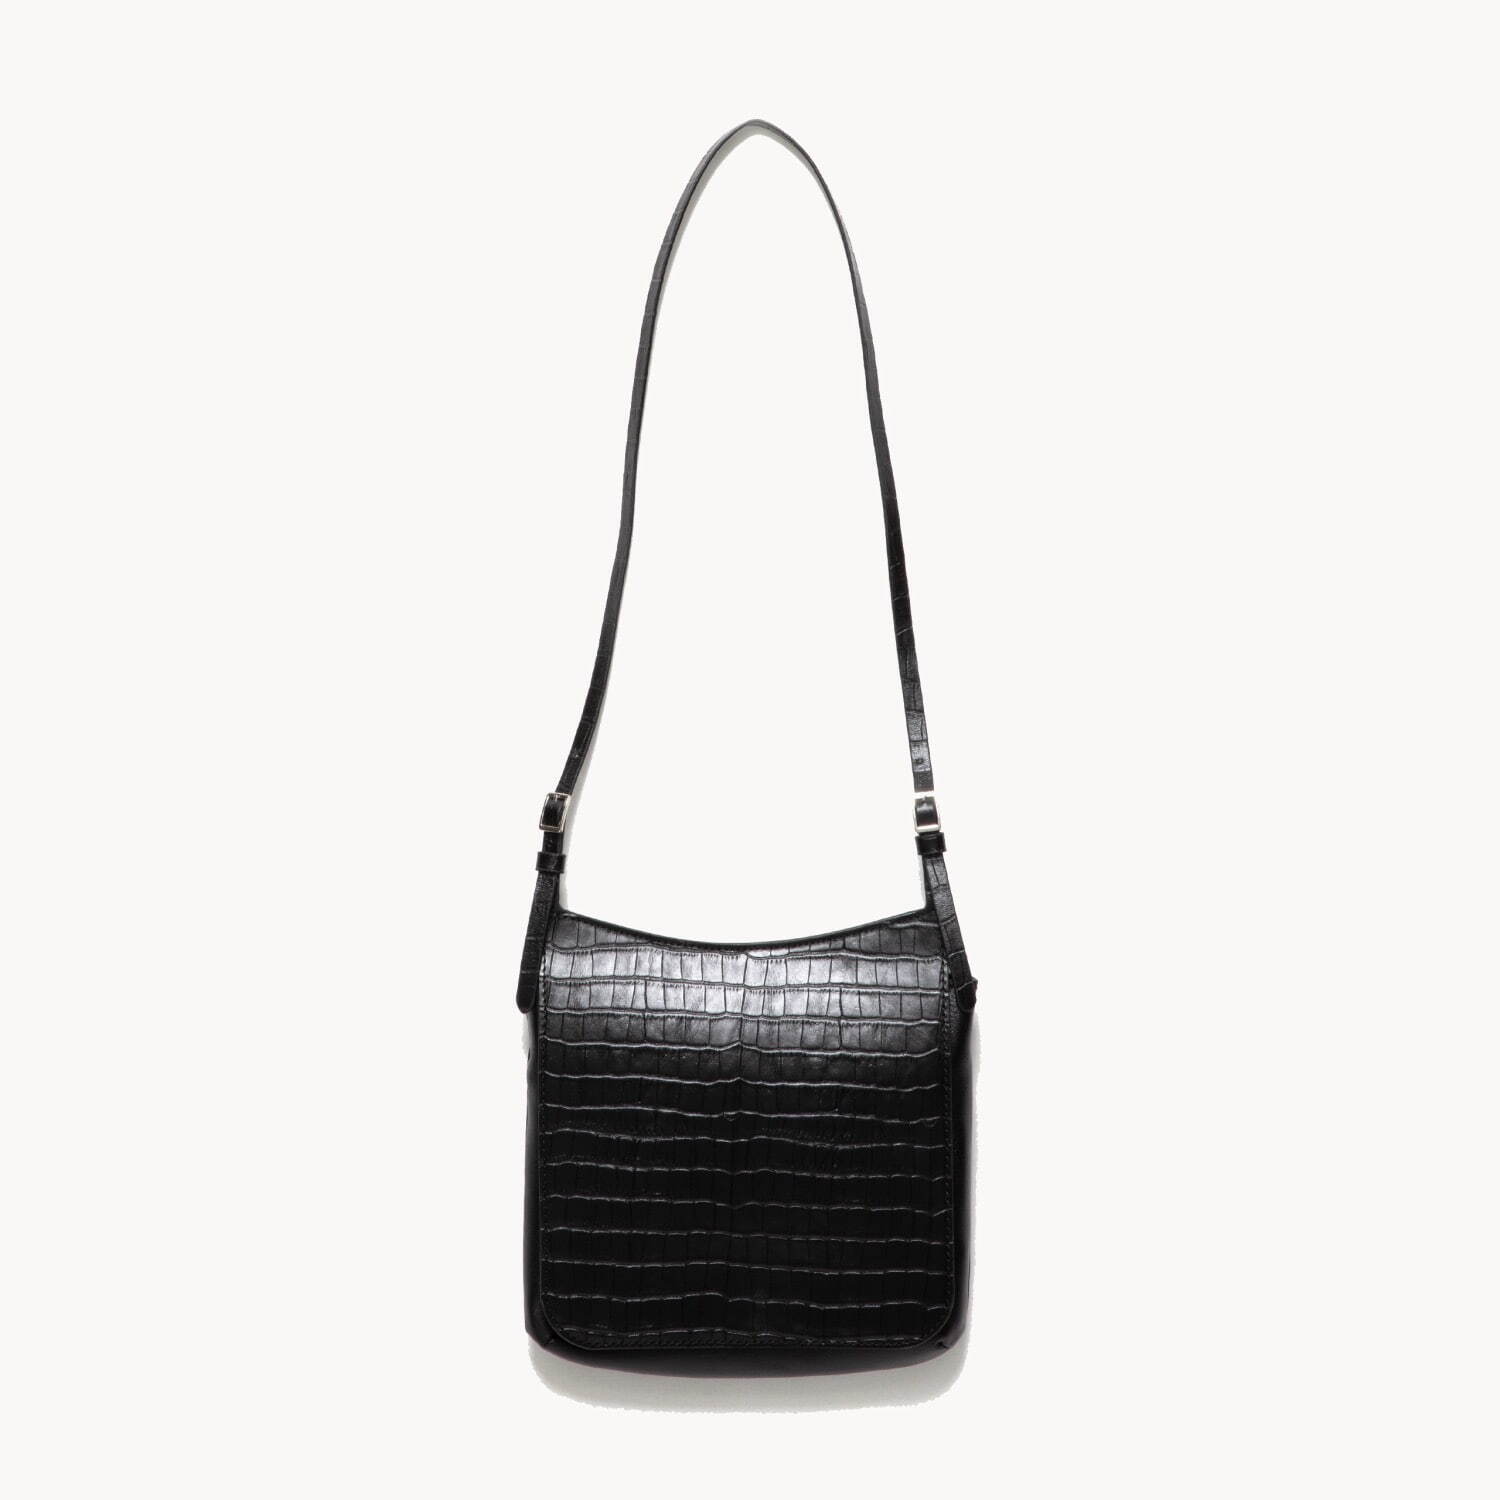 Crocodile Embossed Leather Jol Bag 129,800円〈限定アイテム〉